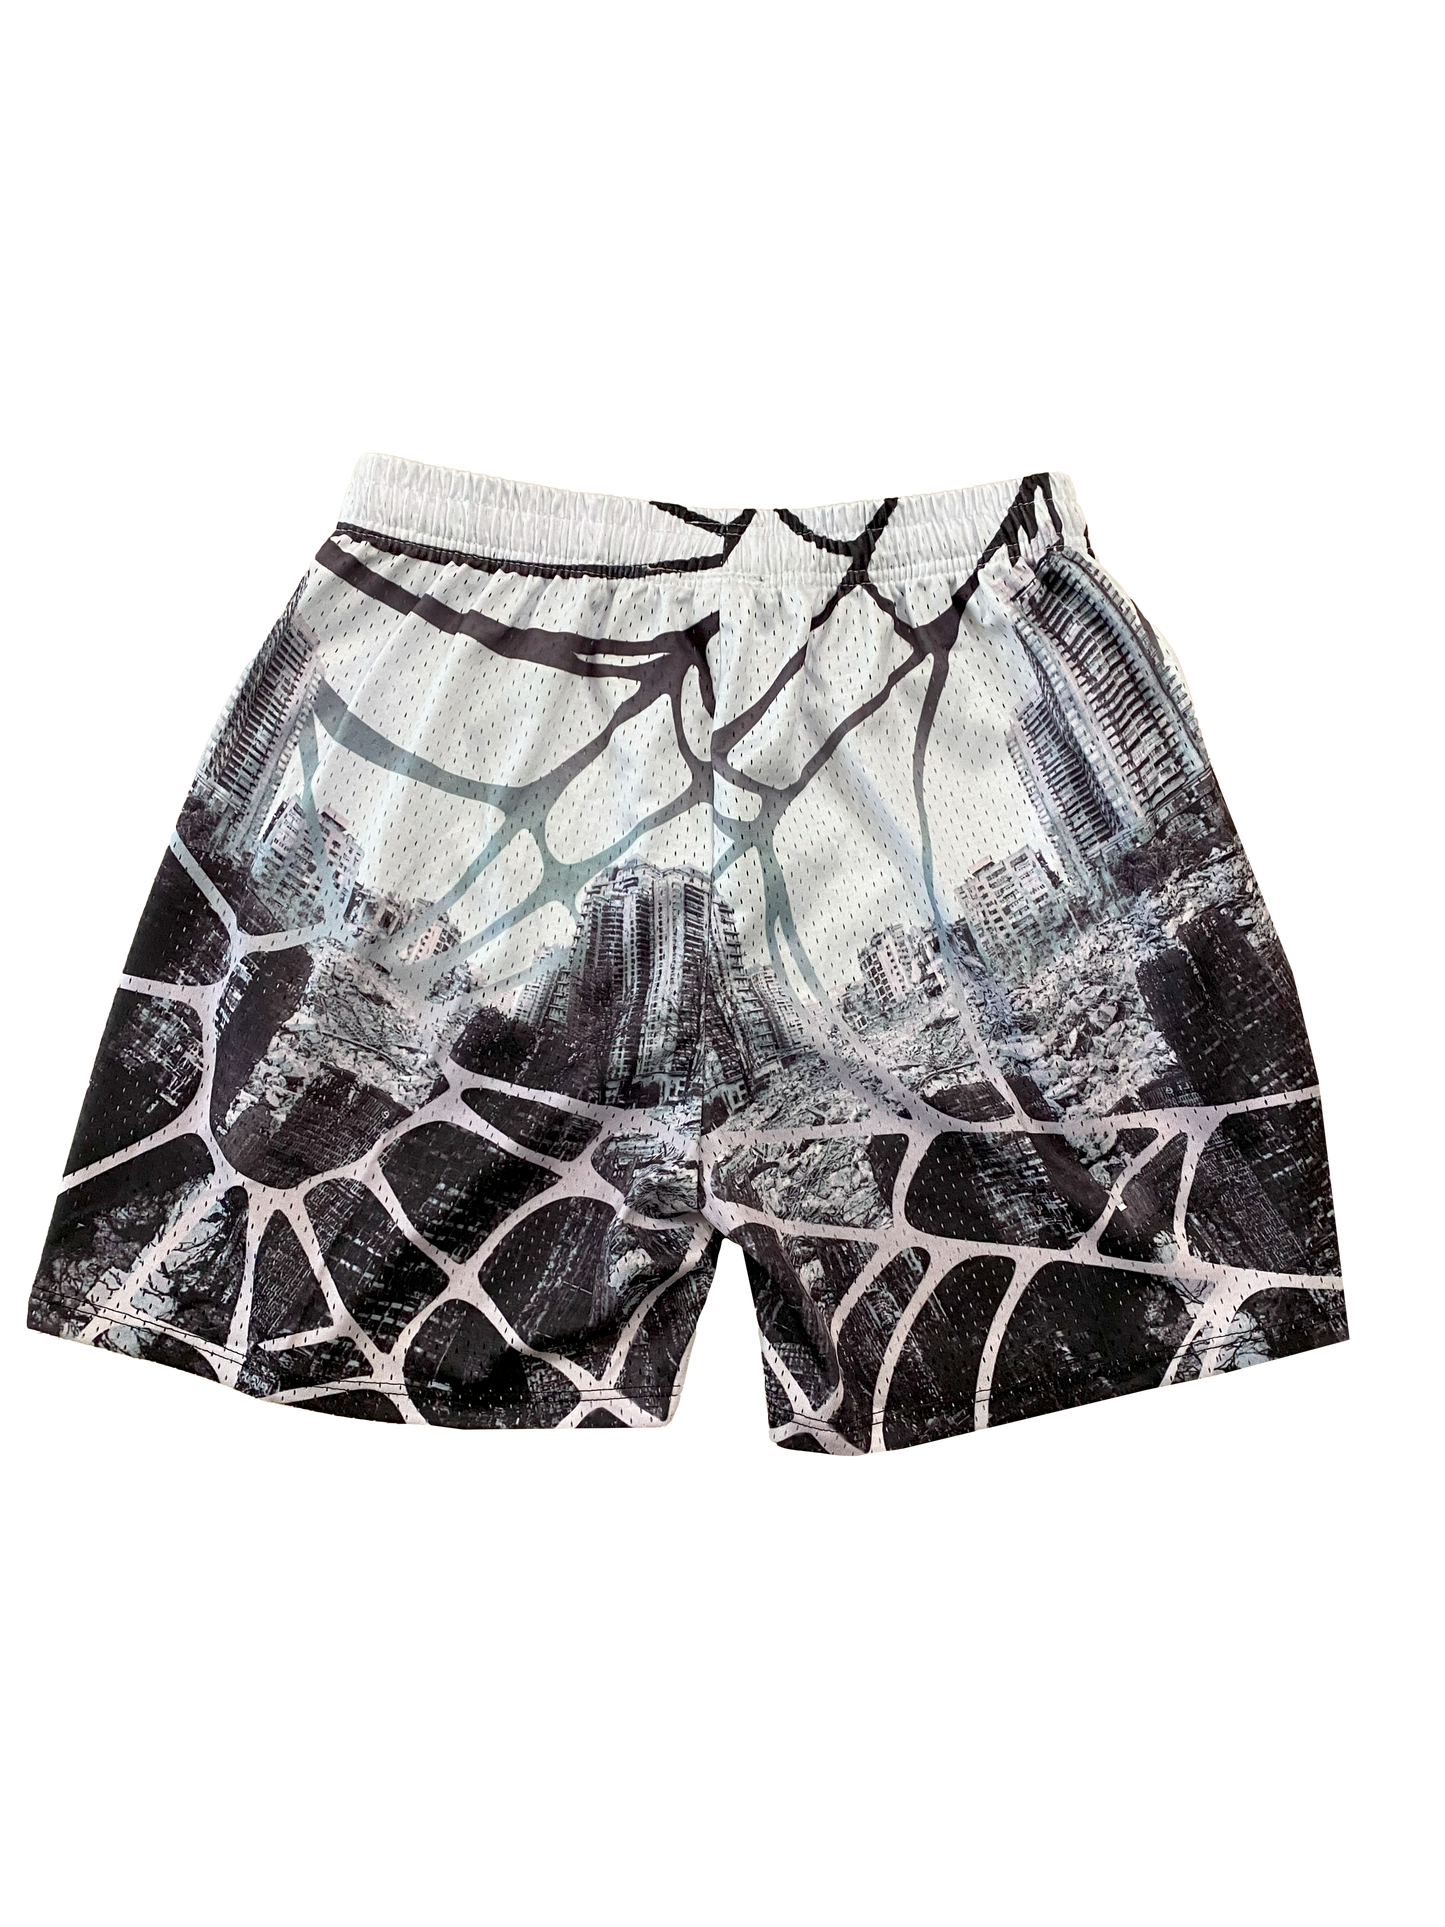 Spider Web Mesh Shorts